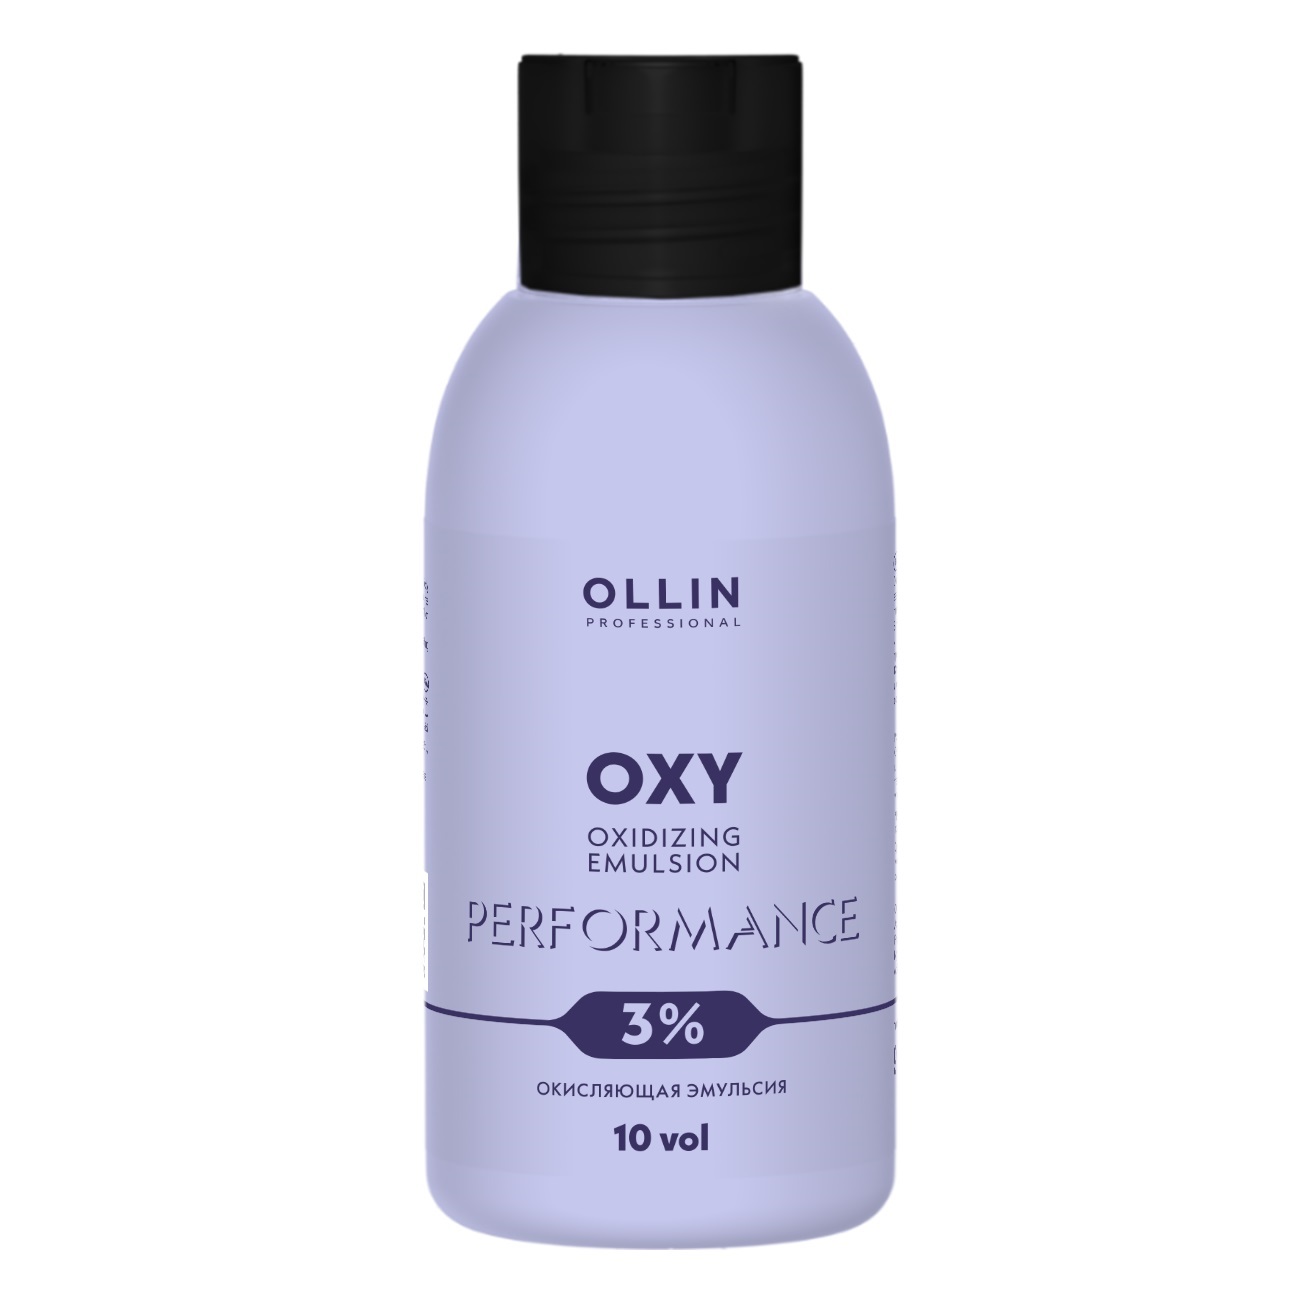 цена Ollin Professional Окисляющая эмульсия 3% 10 vol, 90 мл (Ollin Professional, Performance)